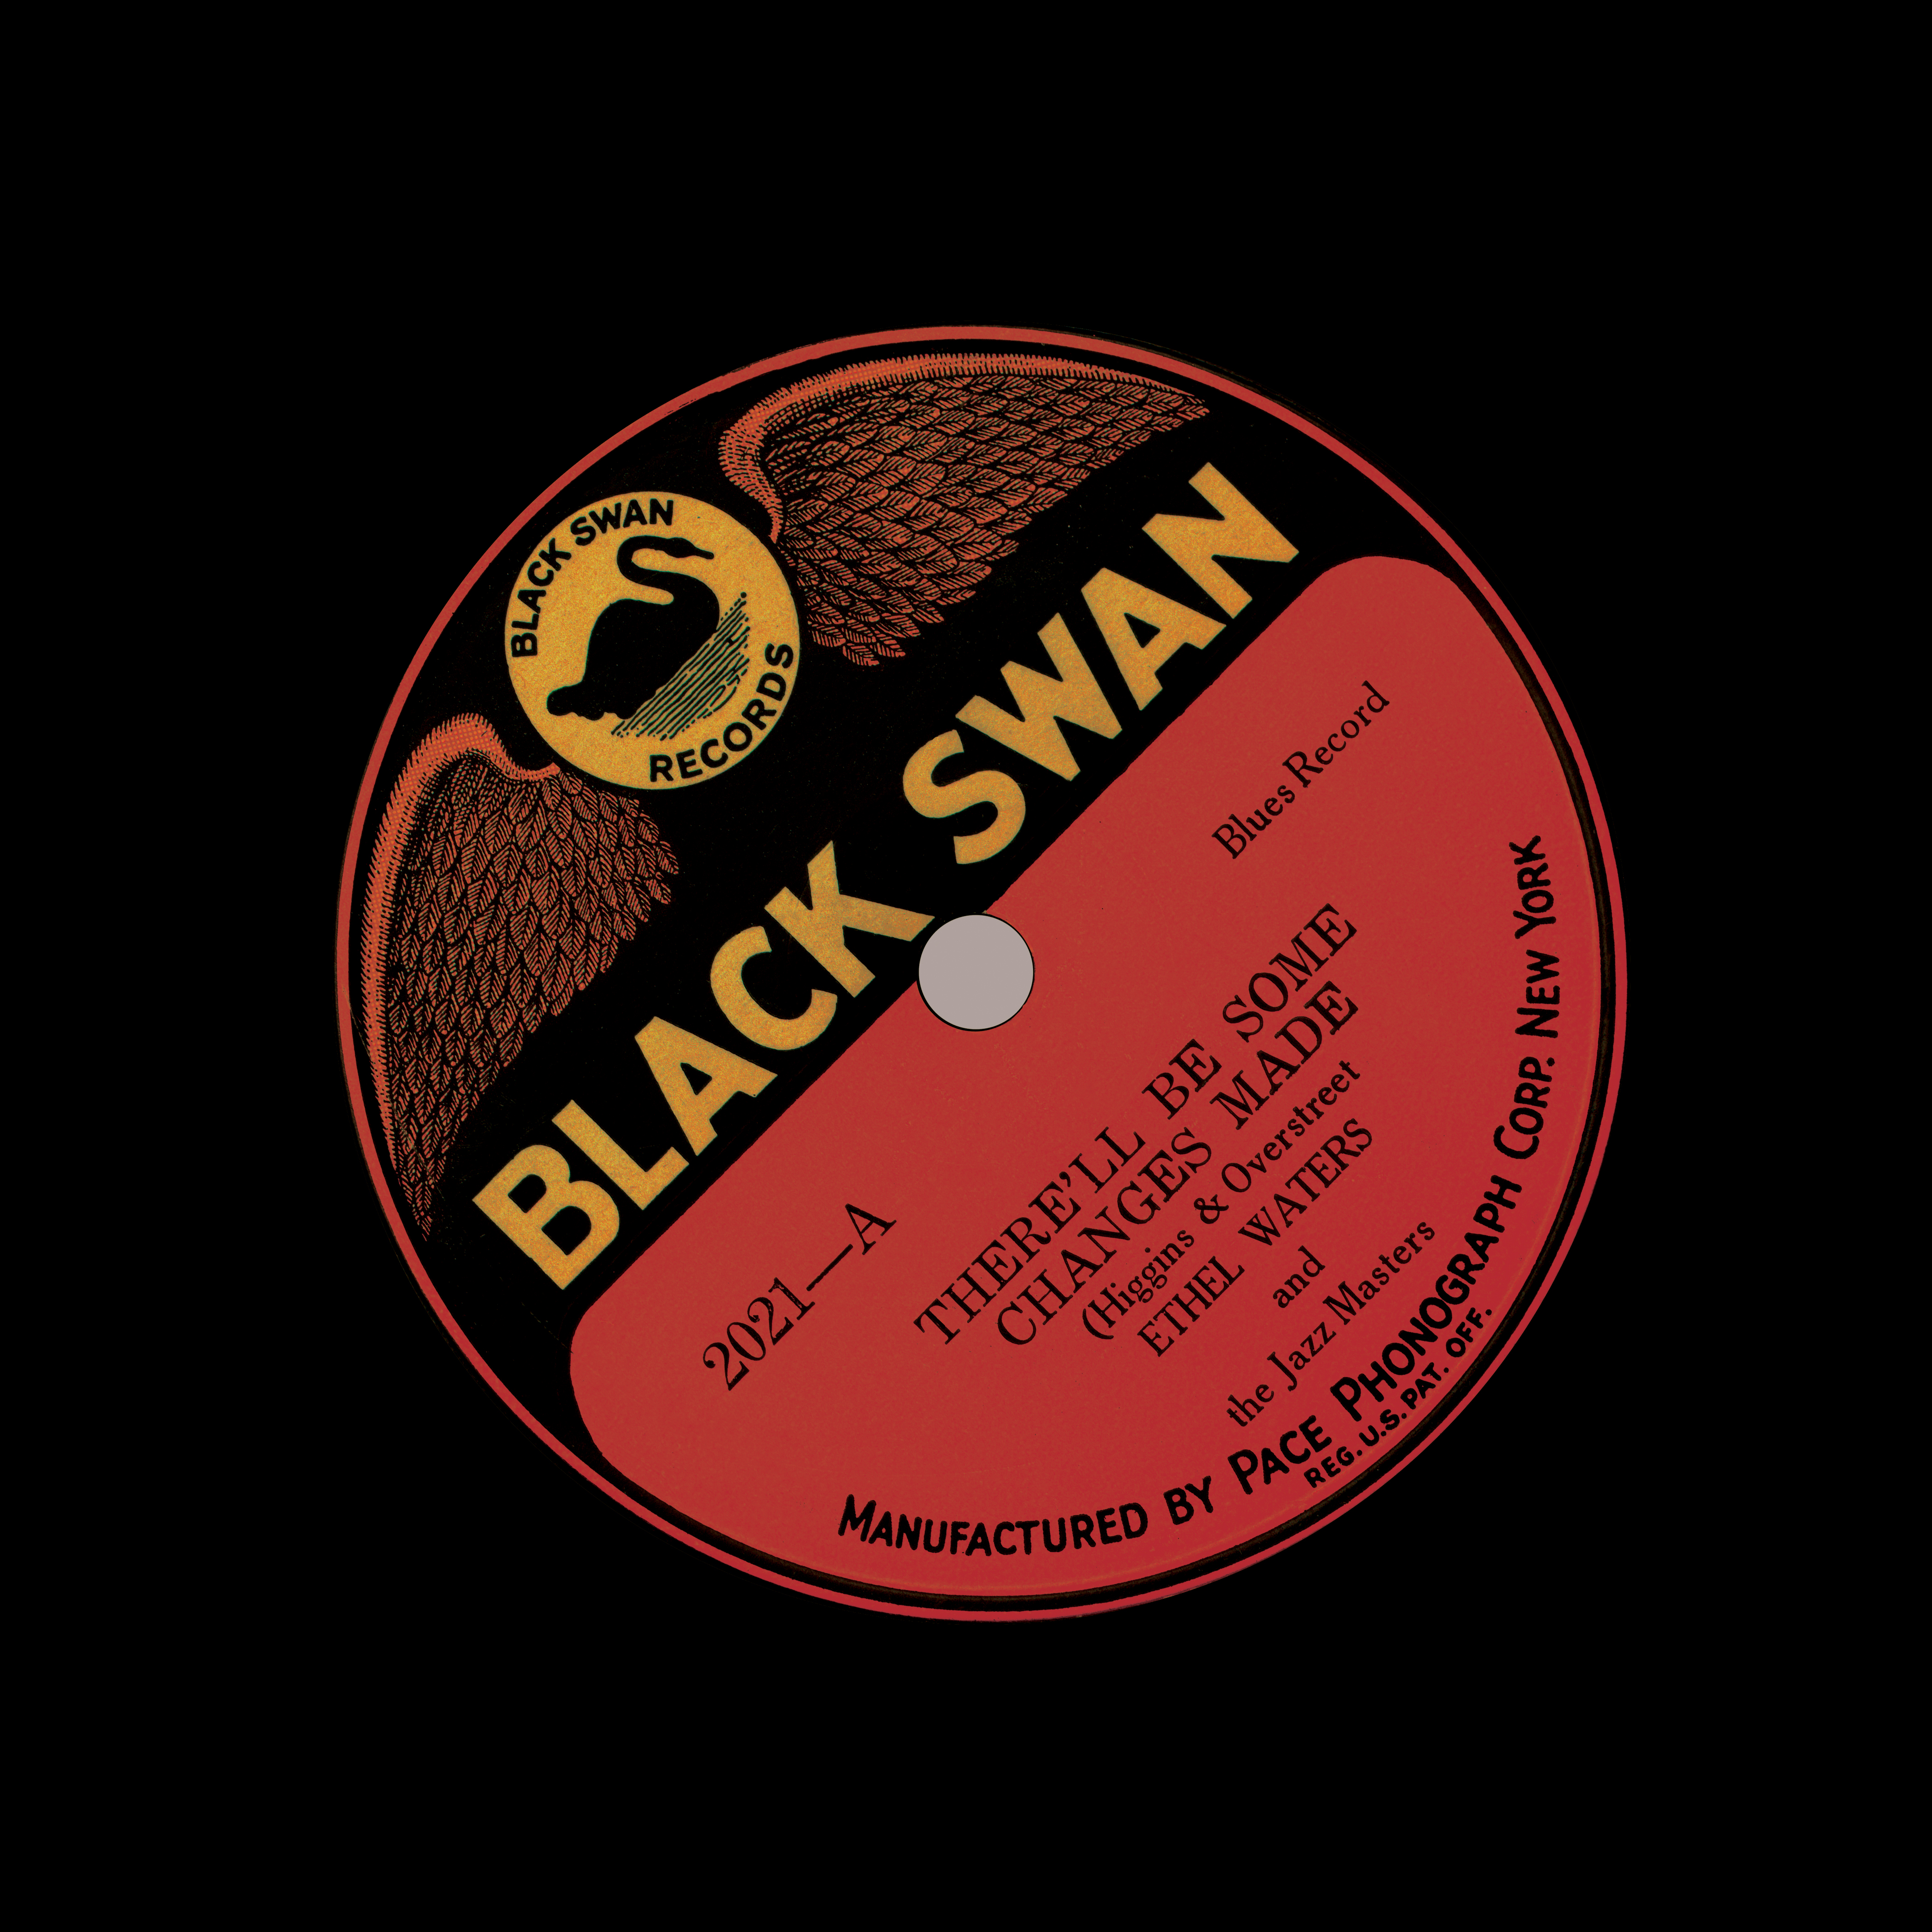 Stjerne hagl alligevel Black Swan Rising | The National Endowment for the Humanities